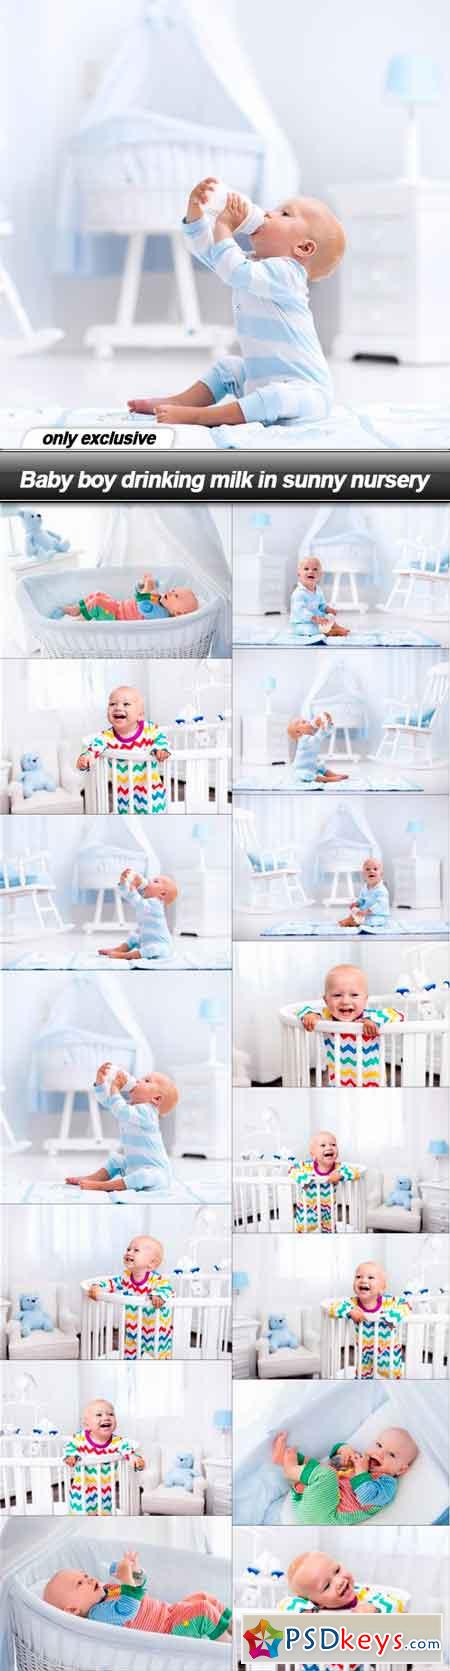 Baby boy drinking milk in sunny nursery - 15 UHQ JPEG